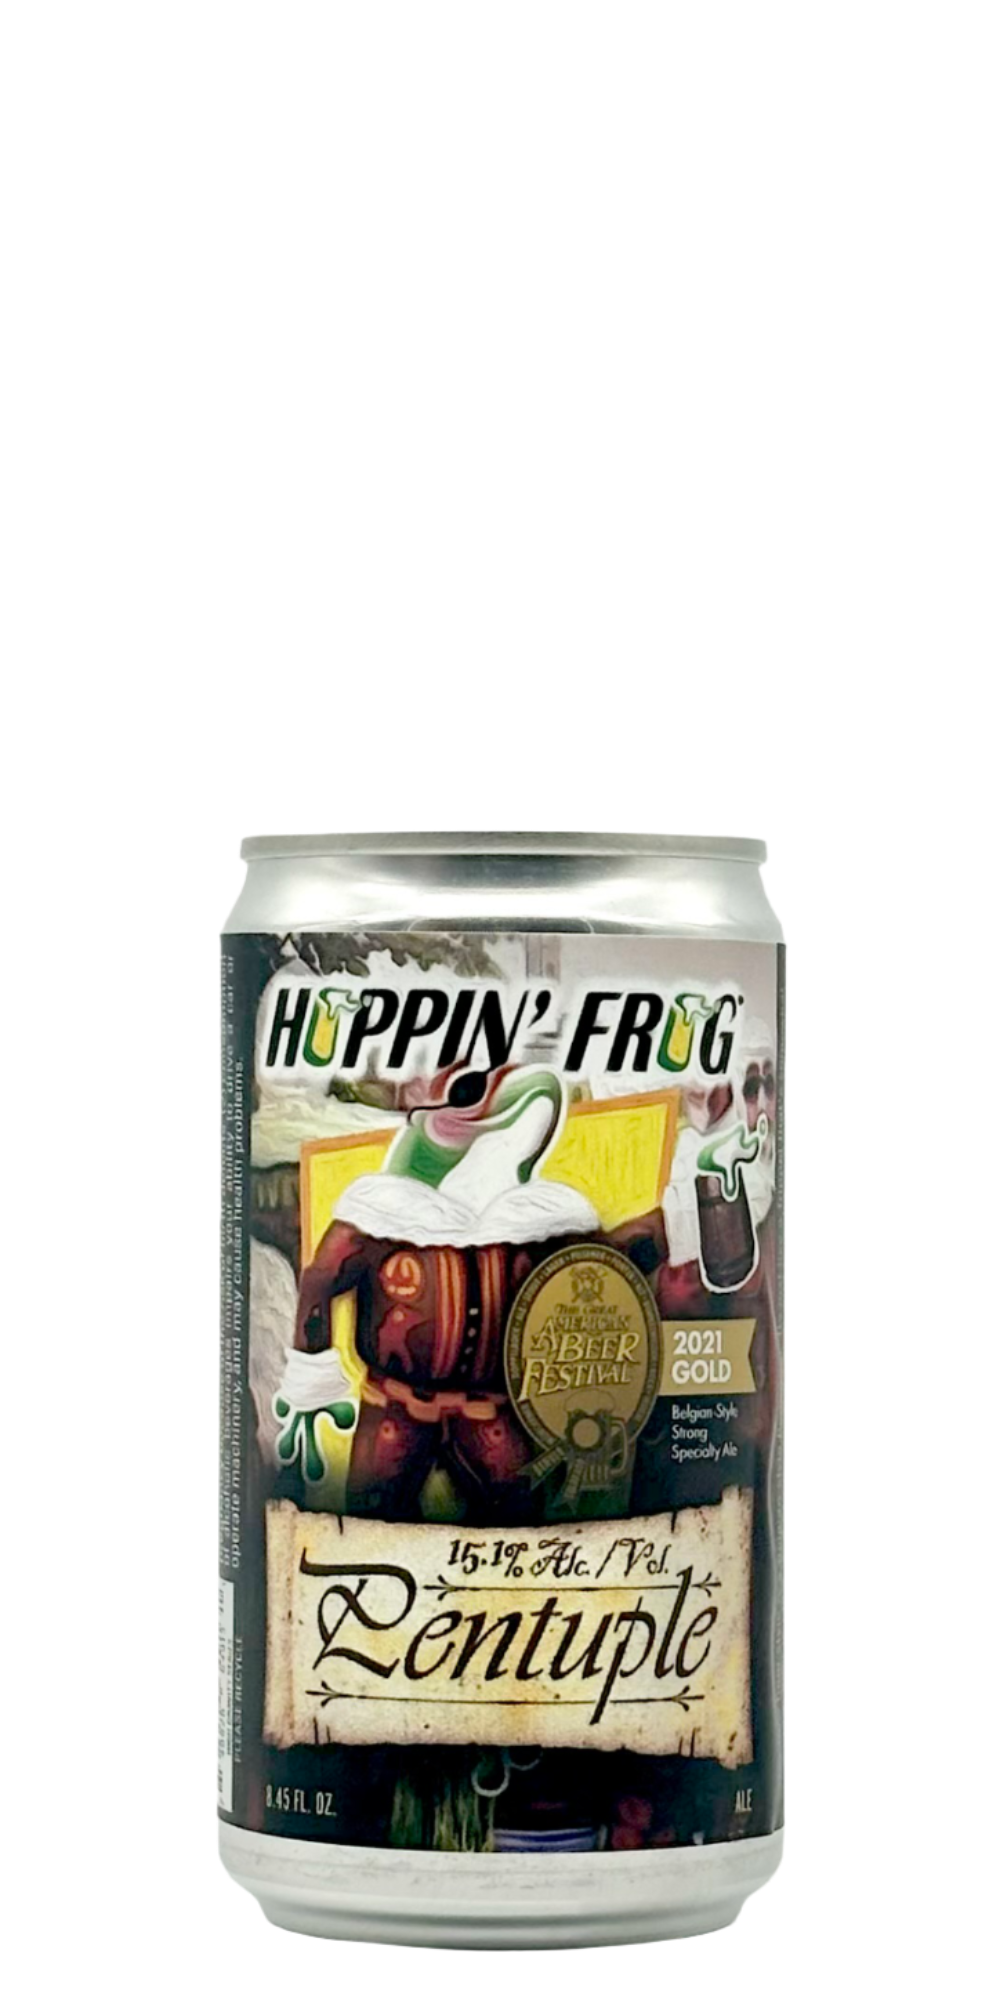 Hoppin' Frog - Pentuple